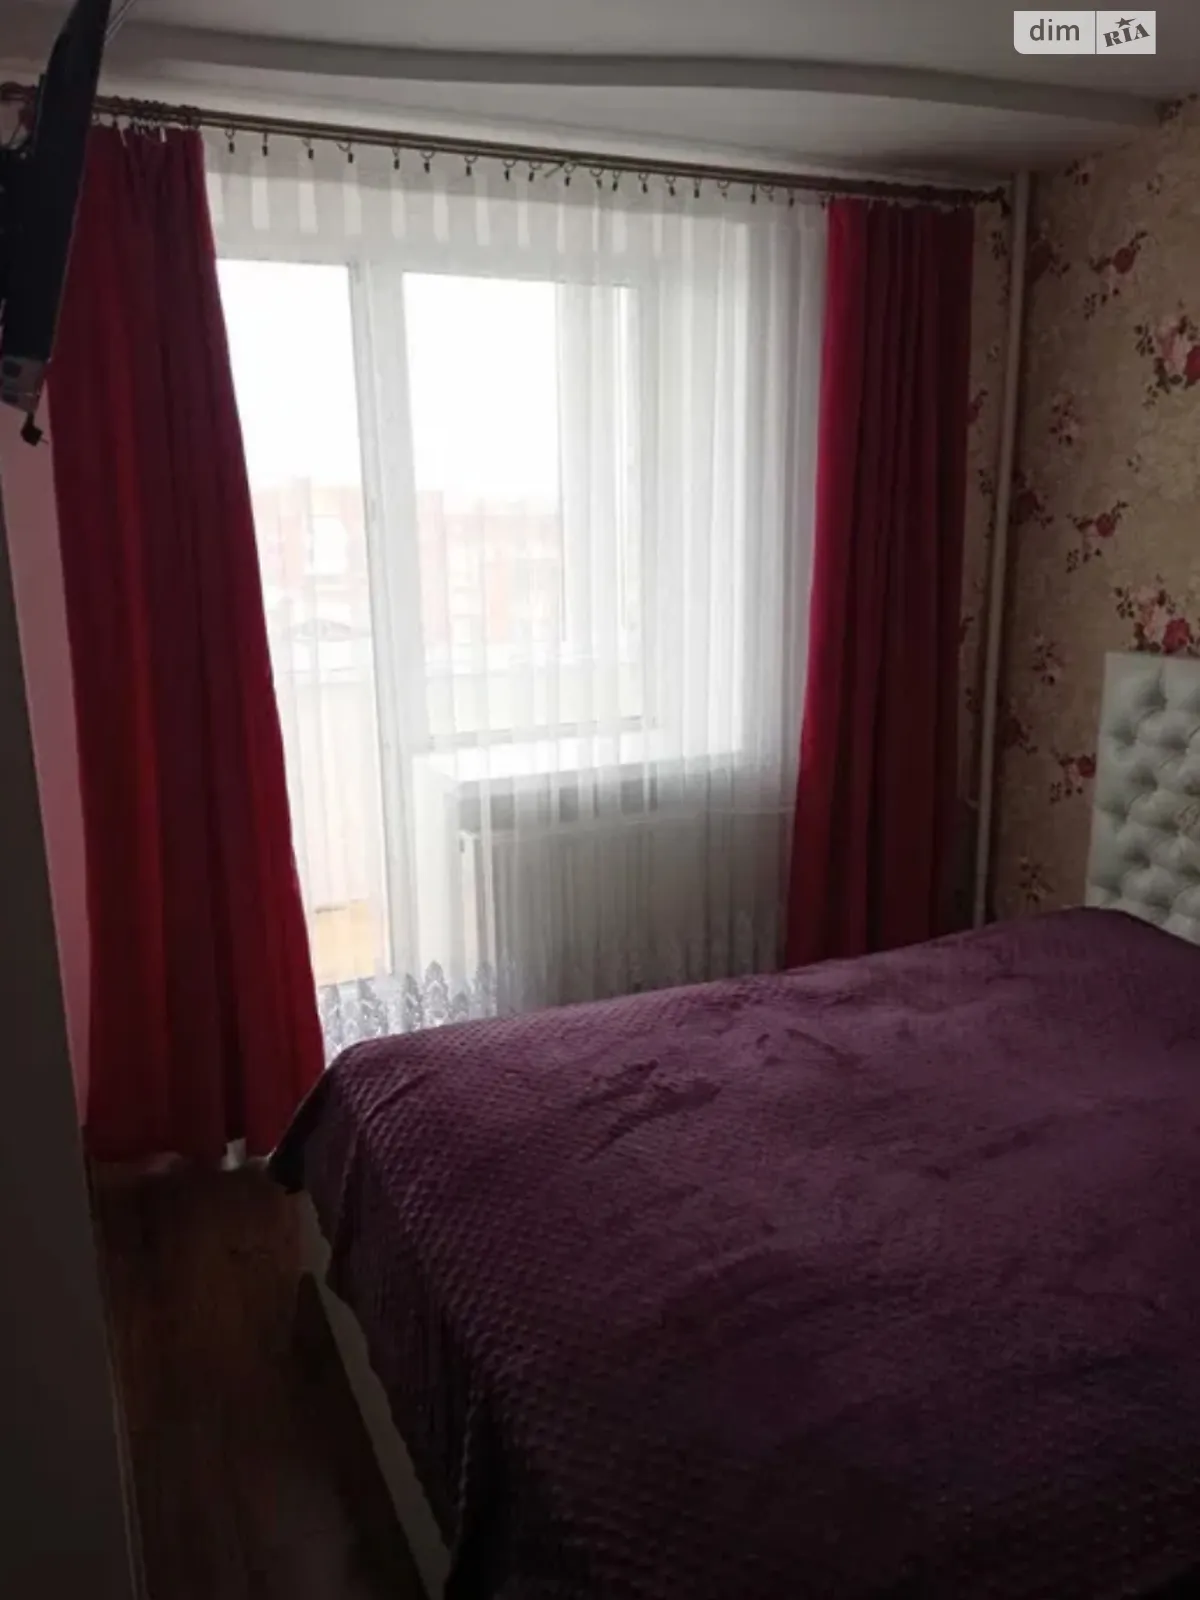 2-кімнатна квартира 67 кв. м у Тернополі, цена: 300 $ - фото 1